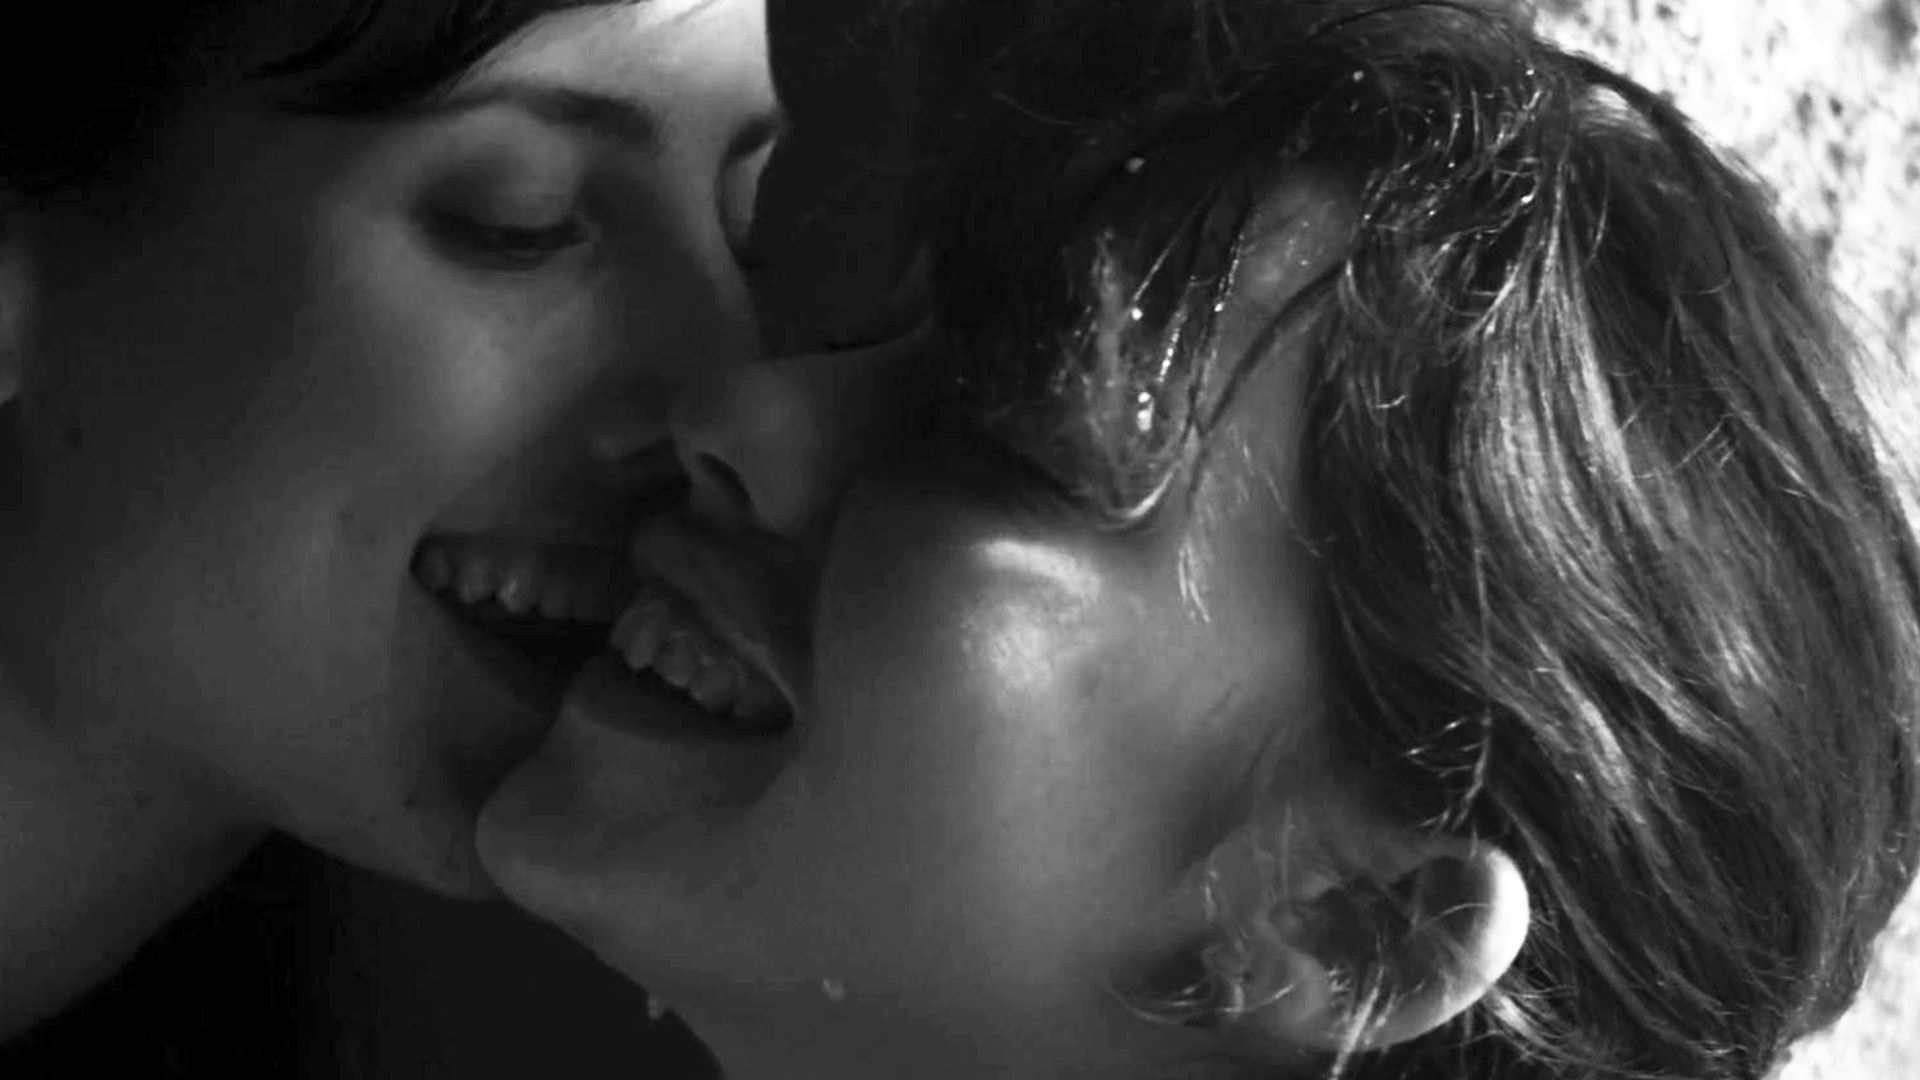 Forceful Romance Videos - The 42 Best Romantic Movie Sex Scenes